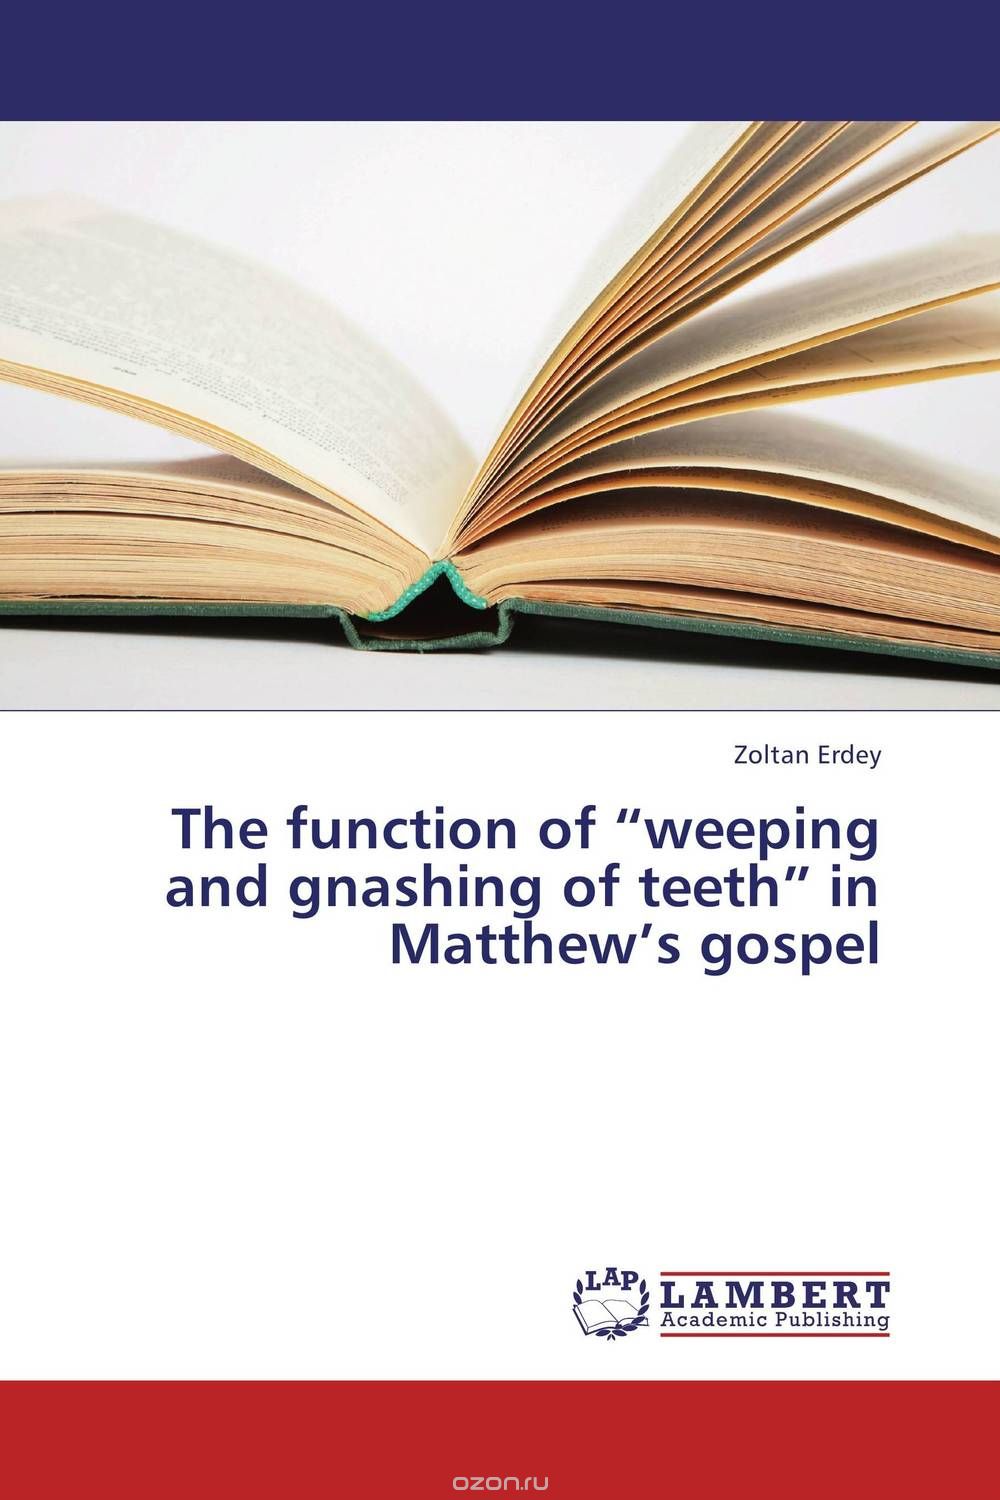 The function of “weeping and gnashing of teeth” in Matthew’s gospel